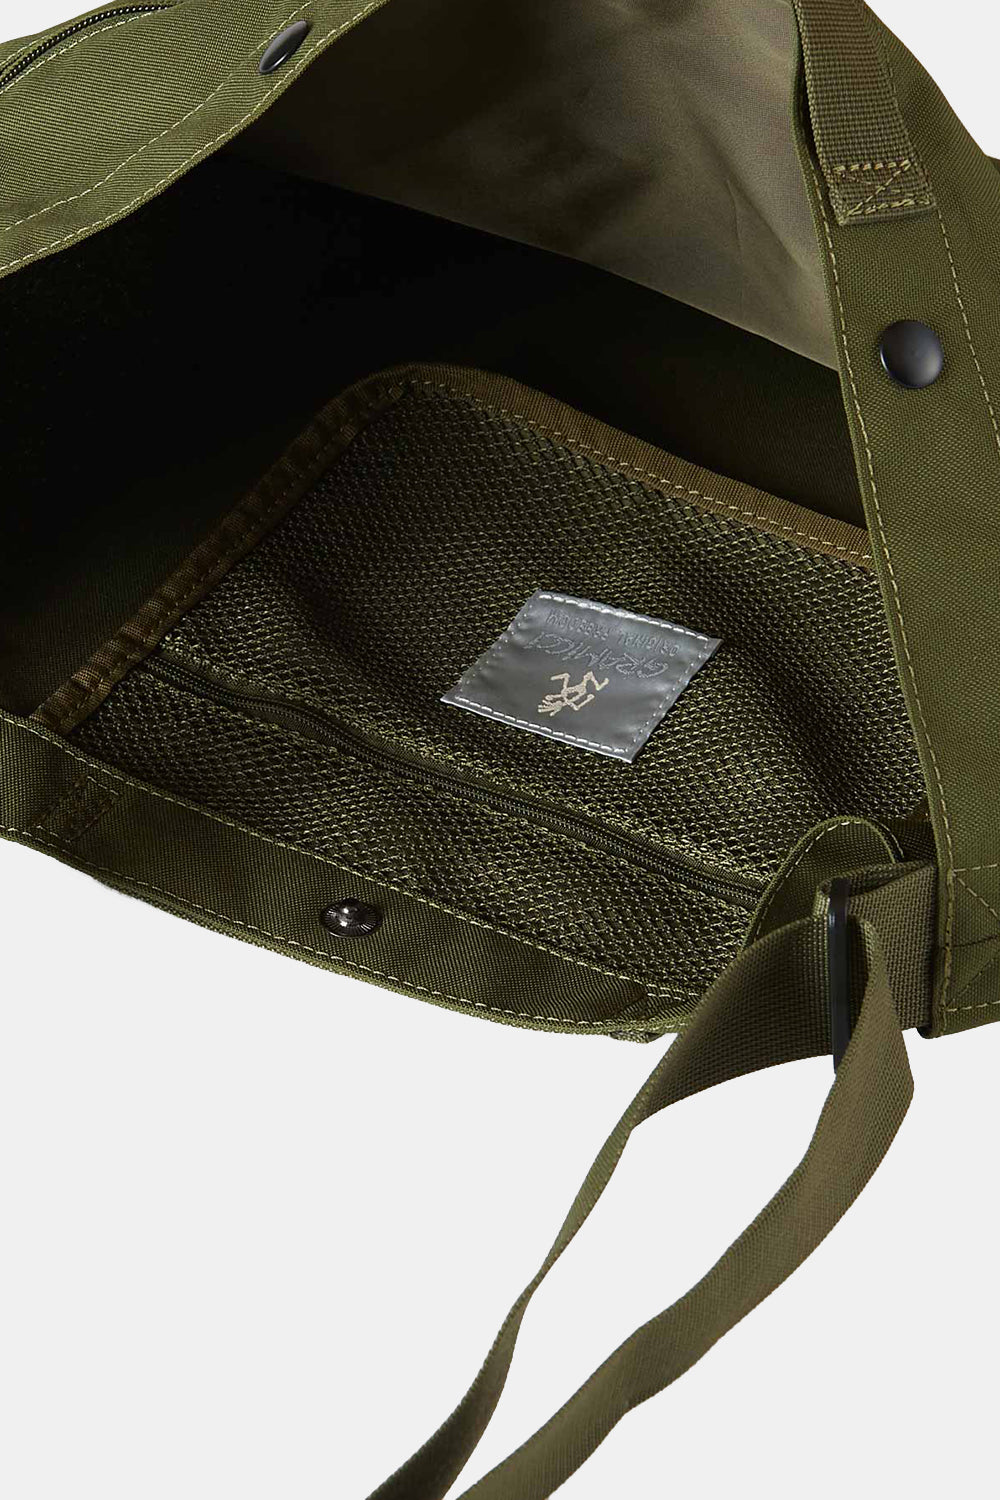 Gramicci Cordura Carrier Bag (Olive Drab)